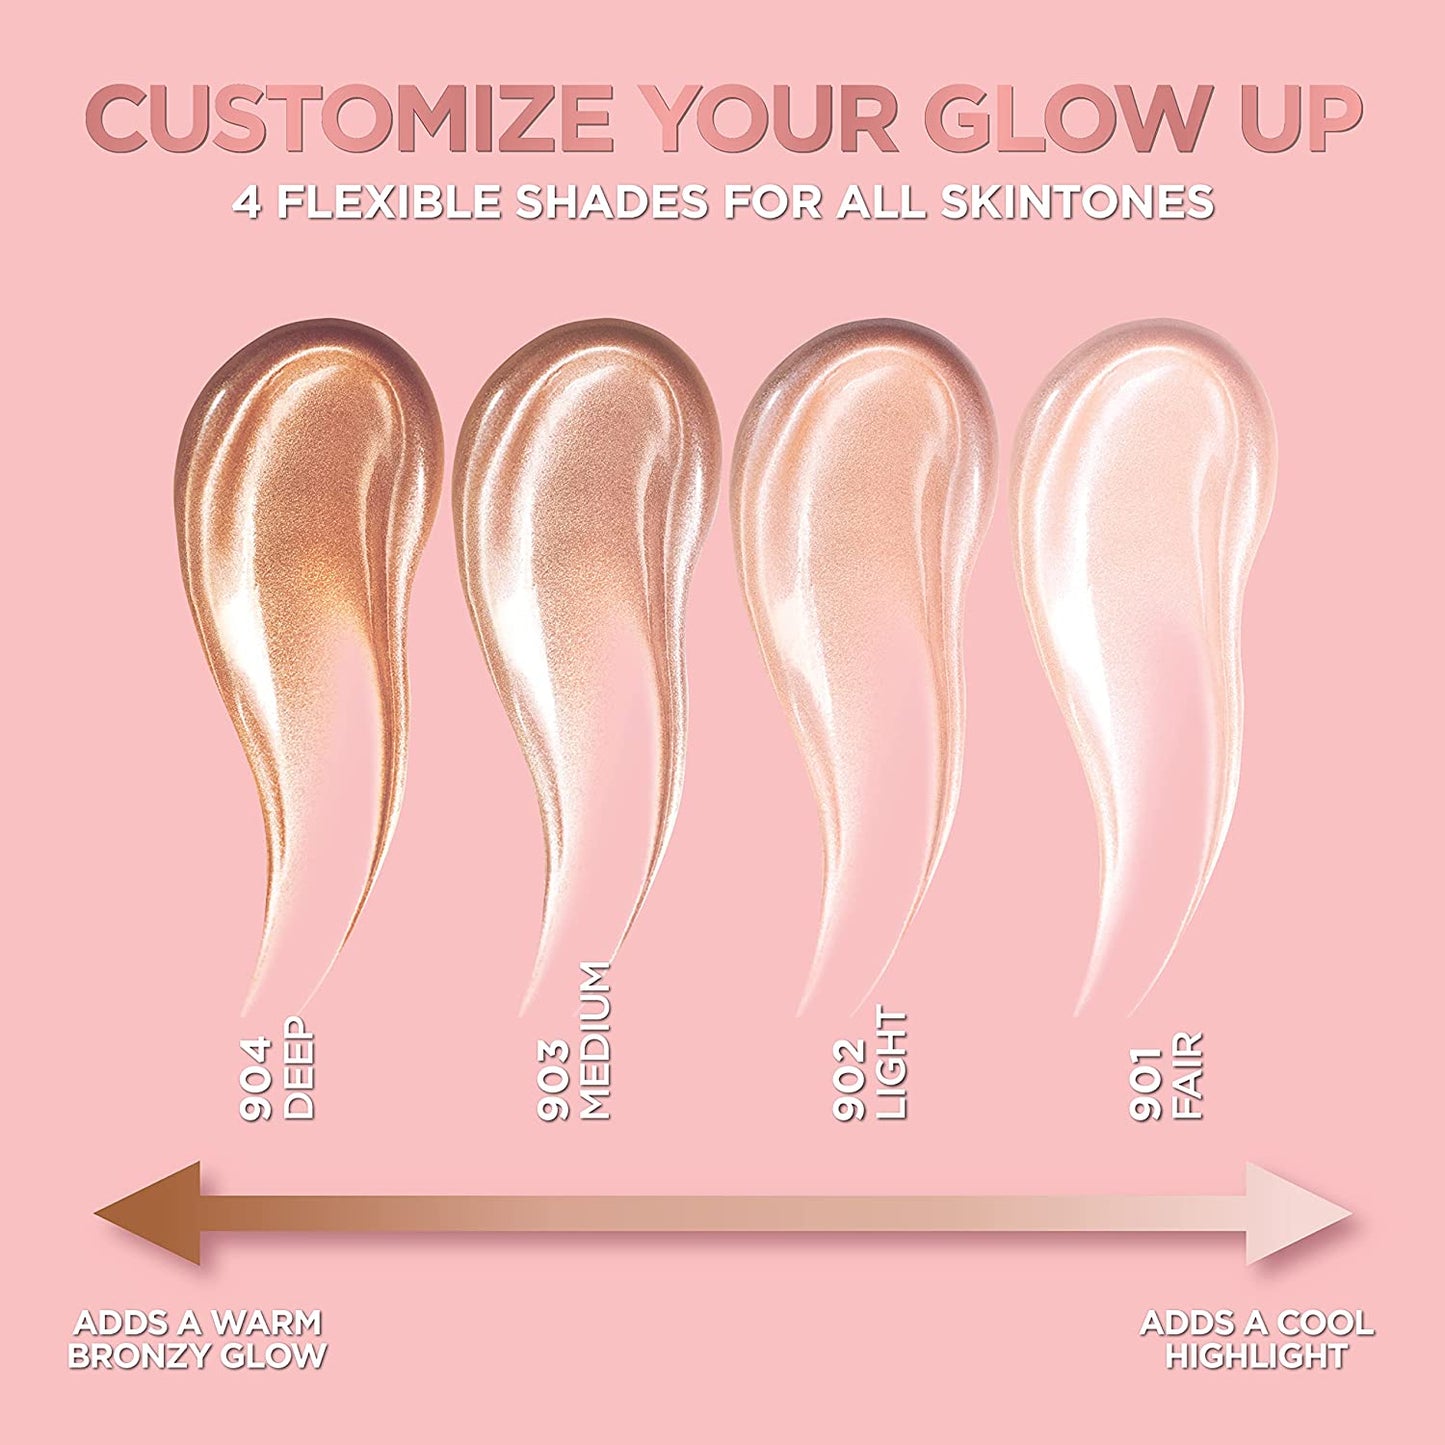 L'Oréal Paris Makeup True Match Lumi Glotion Natural Glow Enhancer Lotion - Medium - 1.35 Ounces